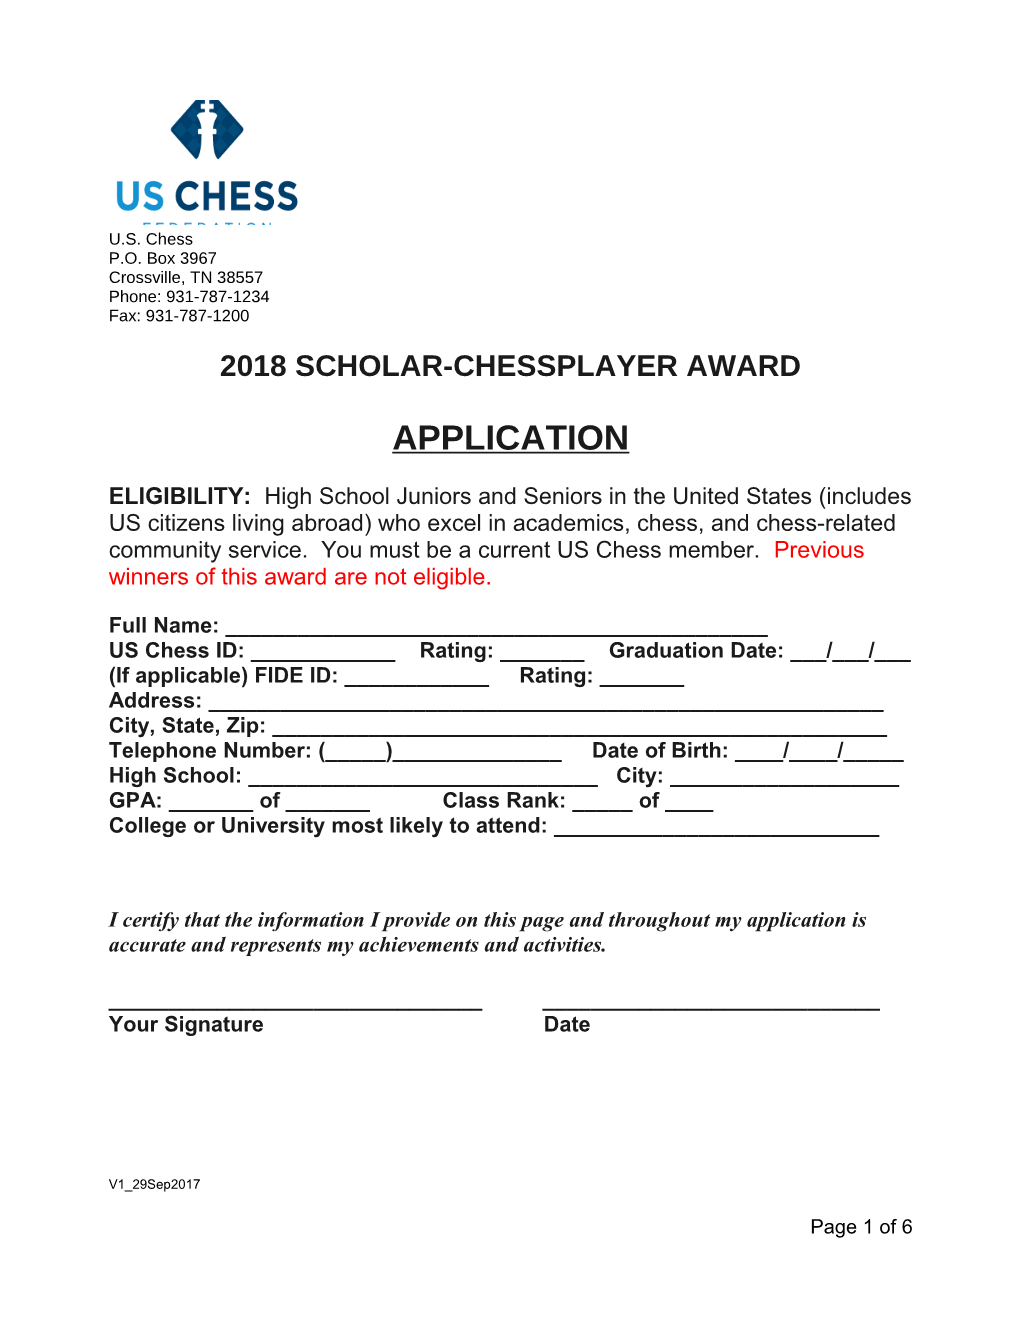 2018 Scholar-Chessplayer Award Application